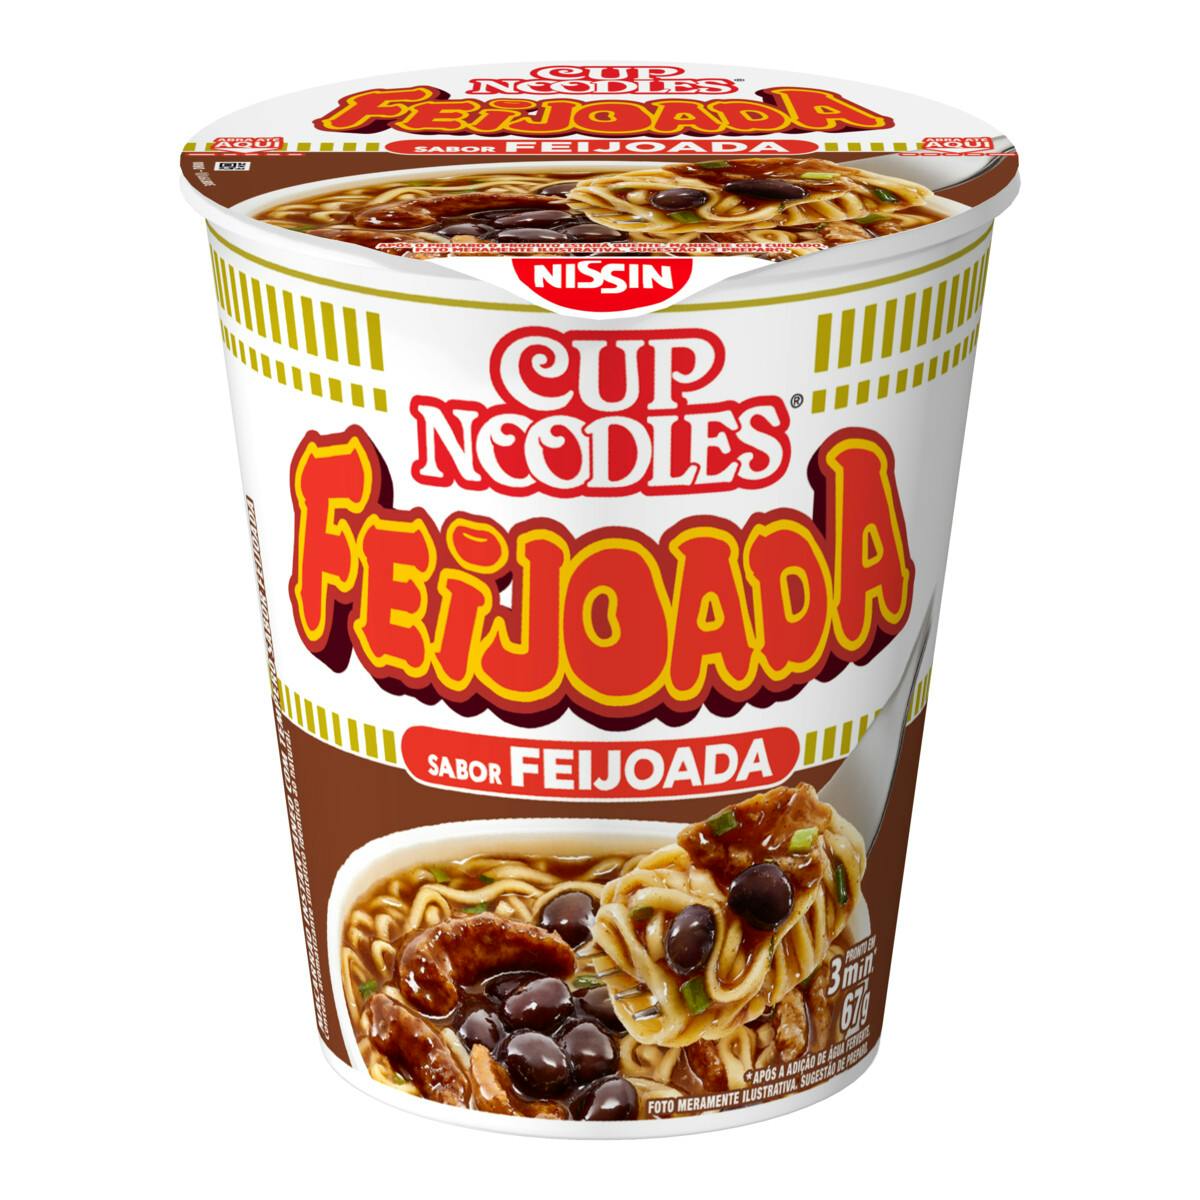  Cup Noodles Feijoada Nissin Miojo 67g